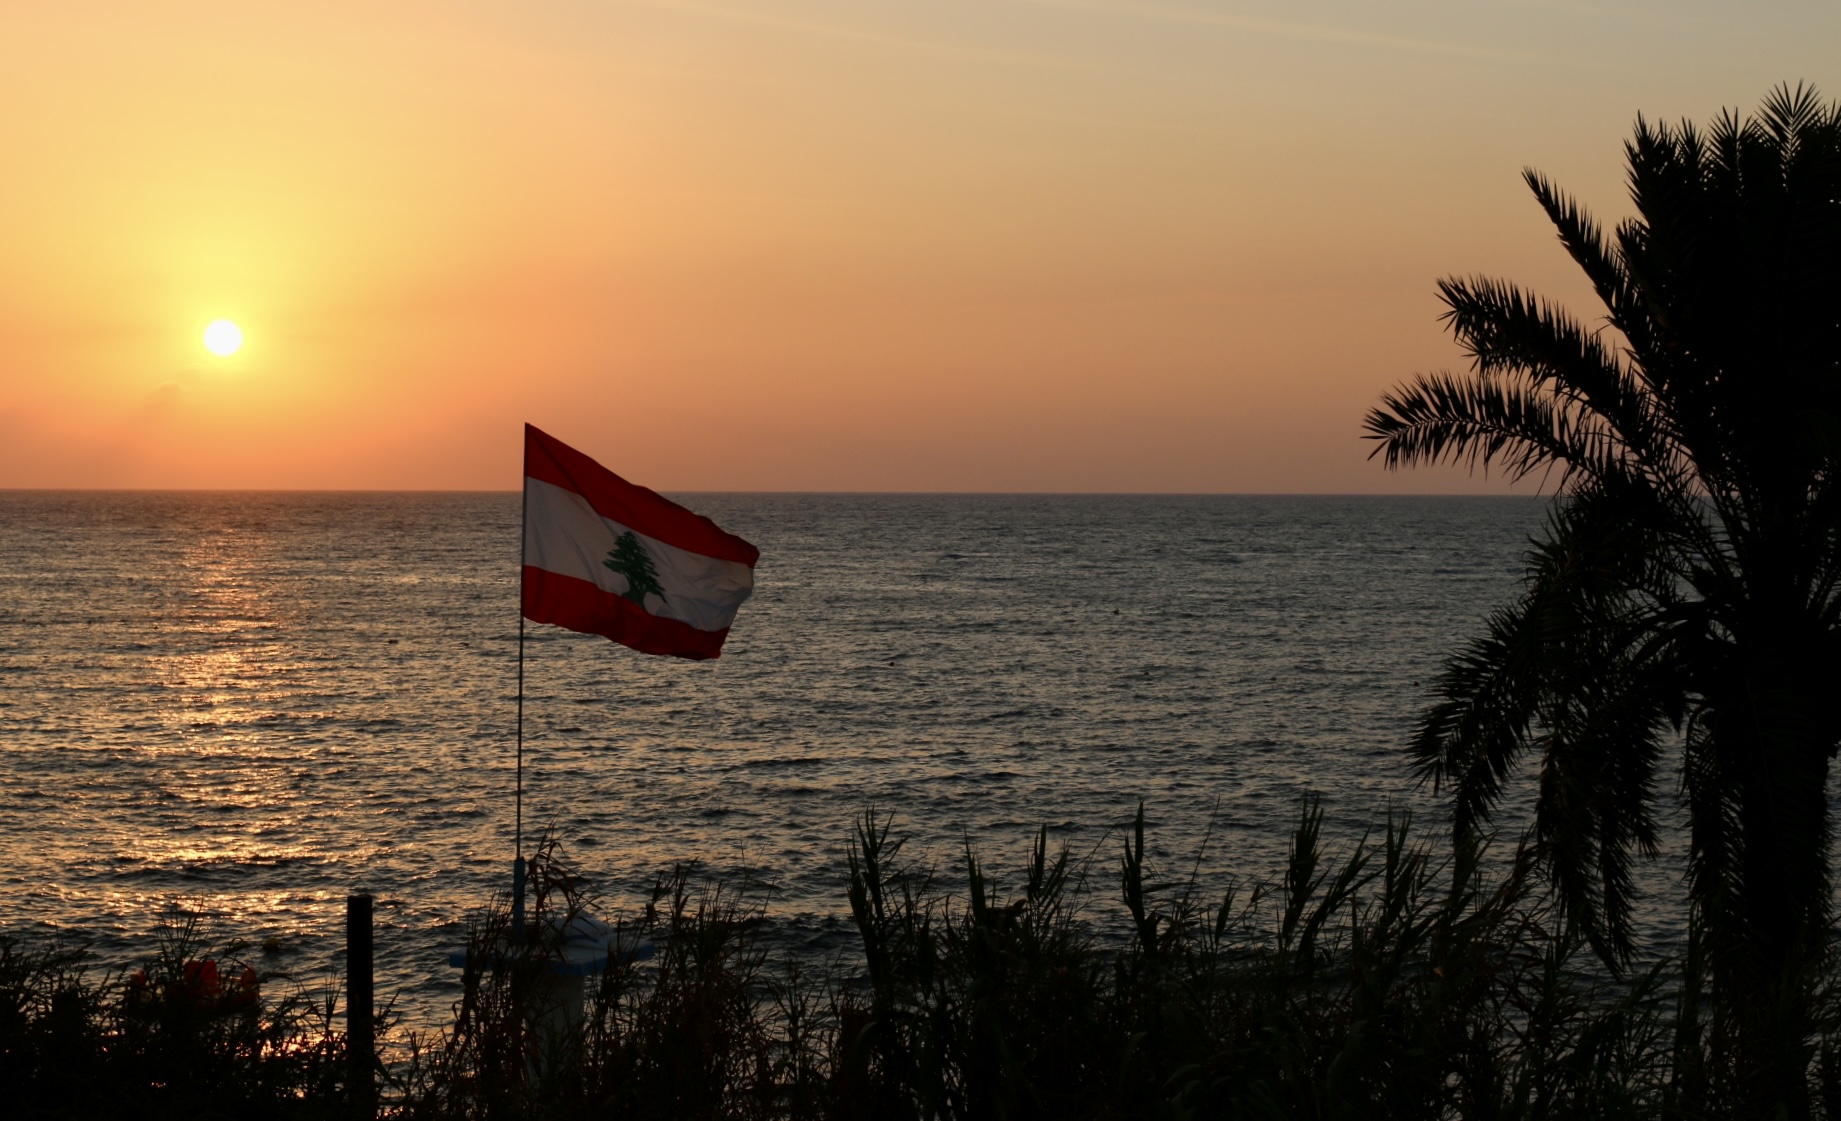 Seascape sunset off the coast of Lebanon, photo by Alexander Haidar